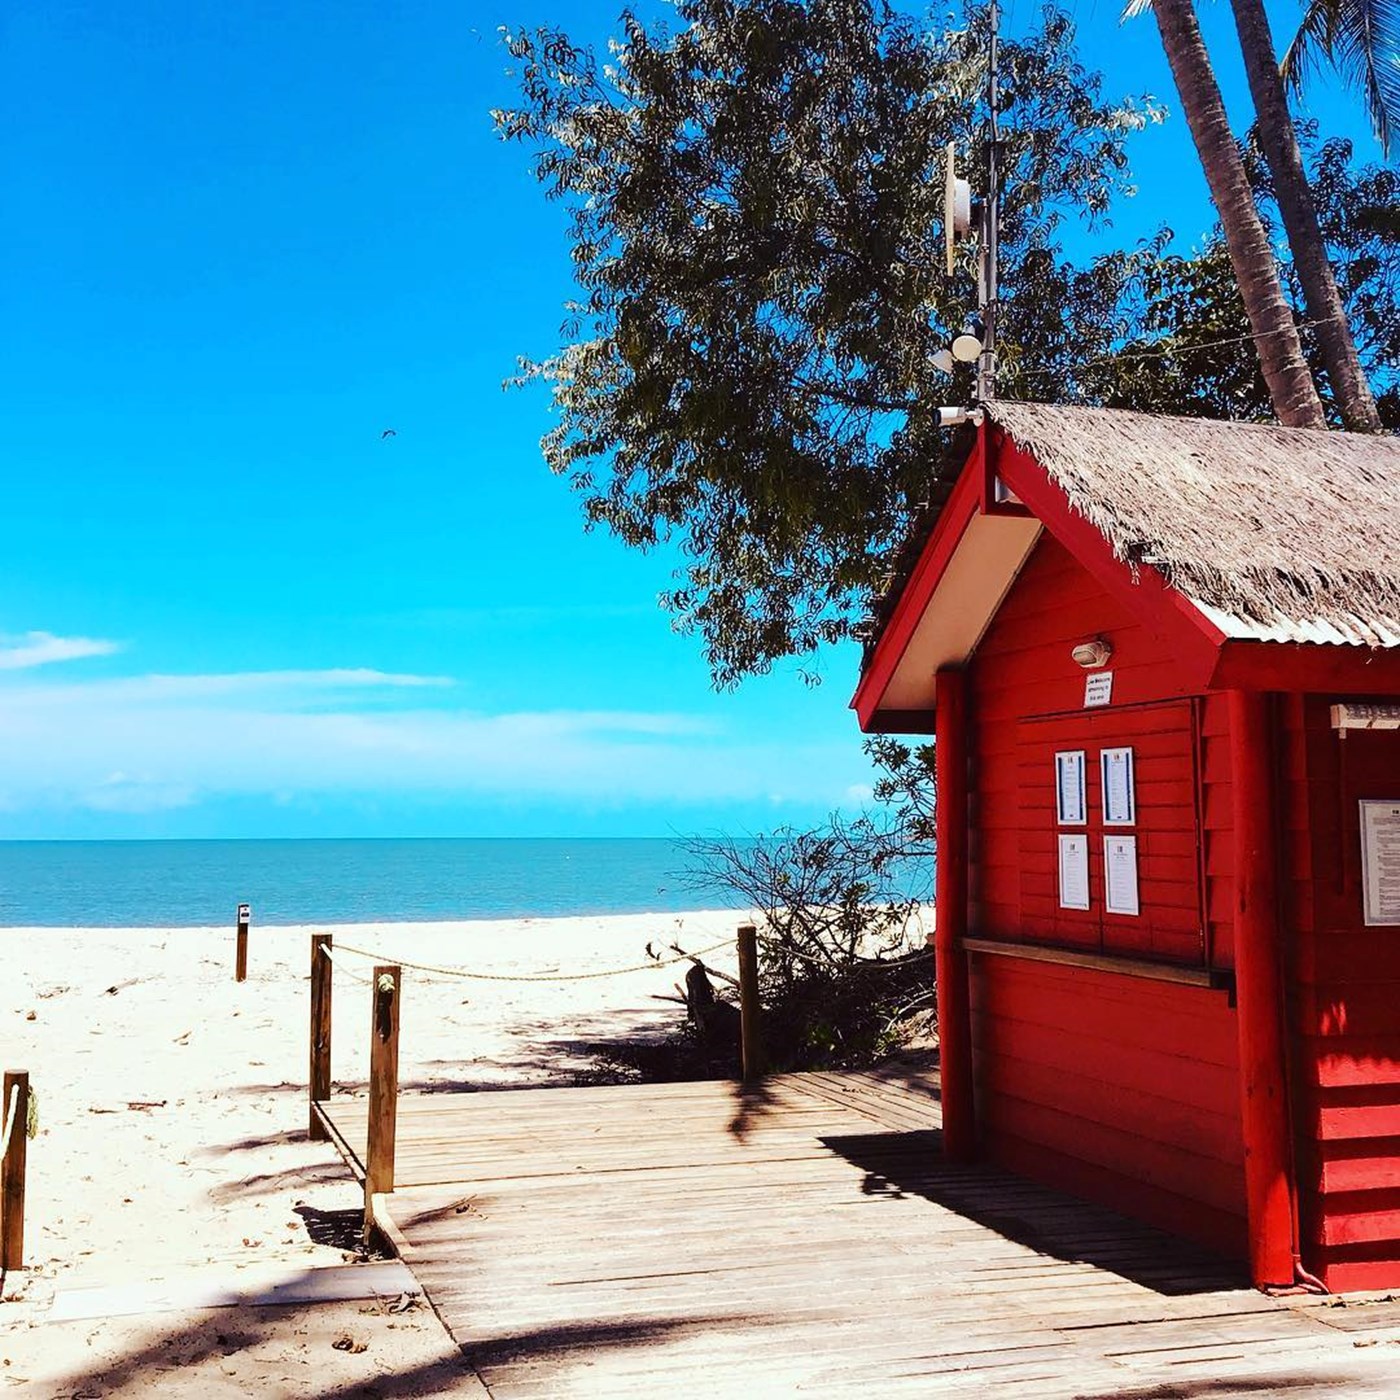 Red beach shack next to a boardwalk facing onto the beach